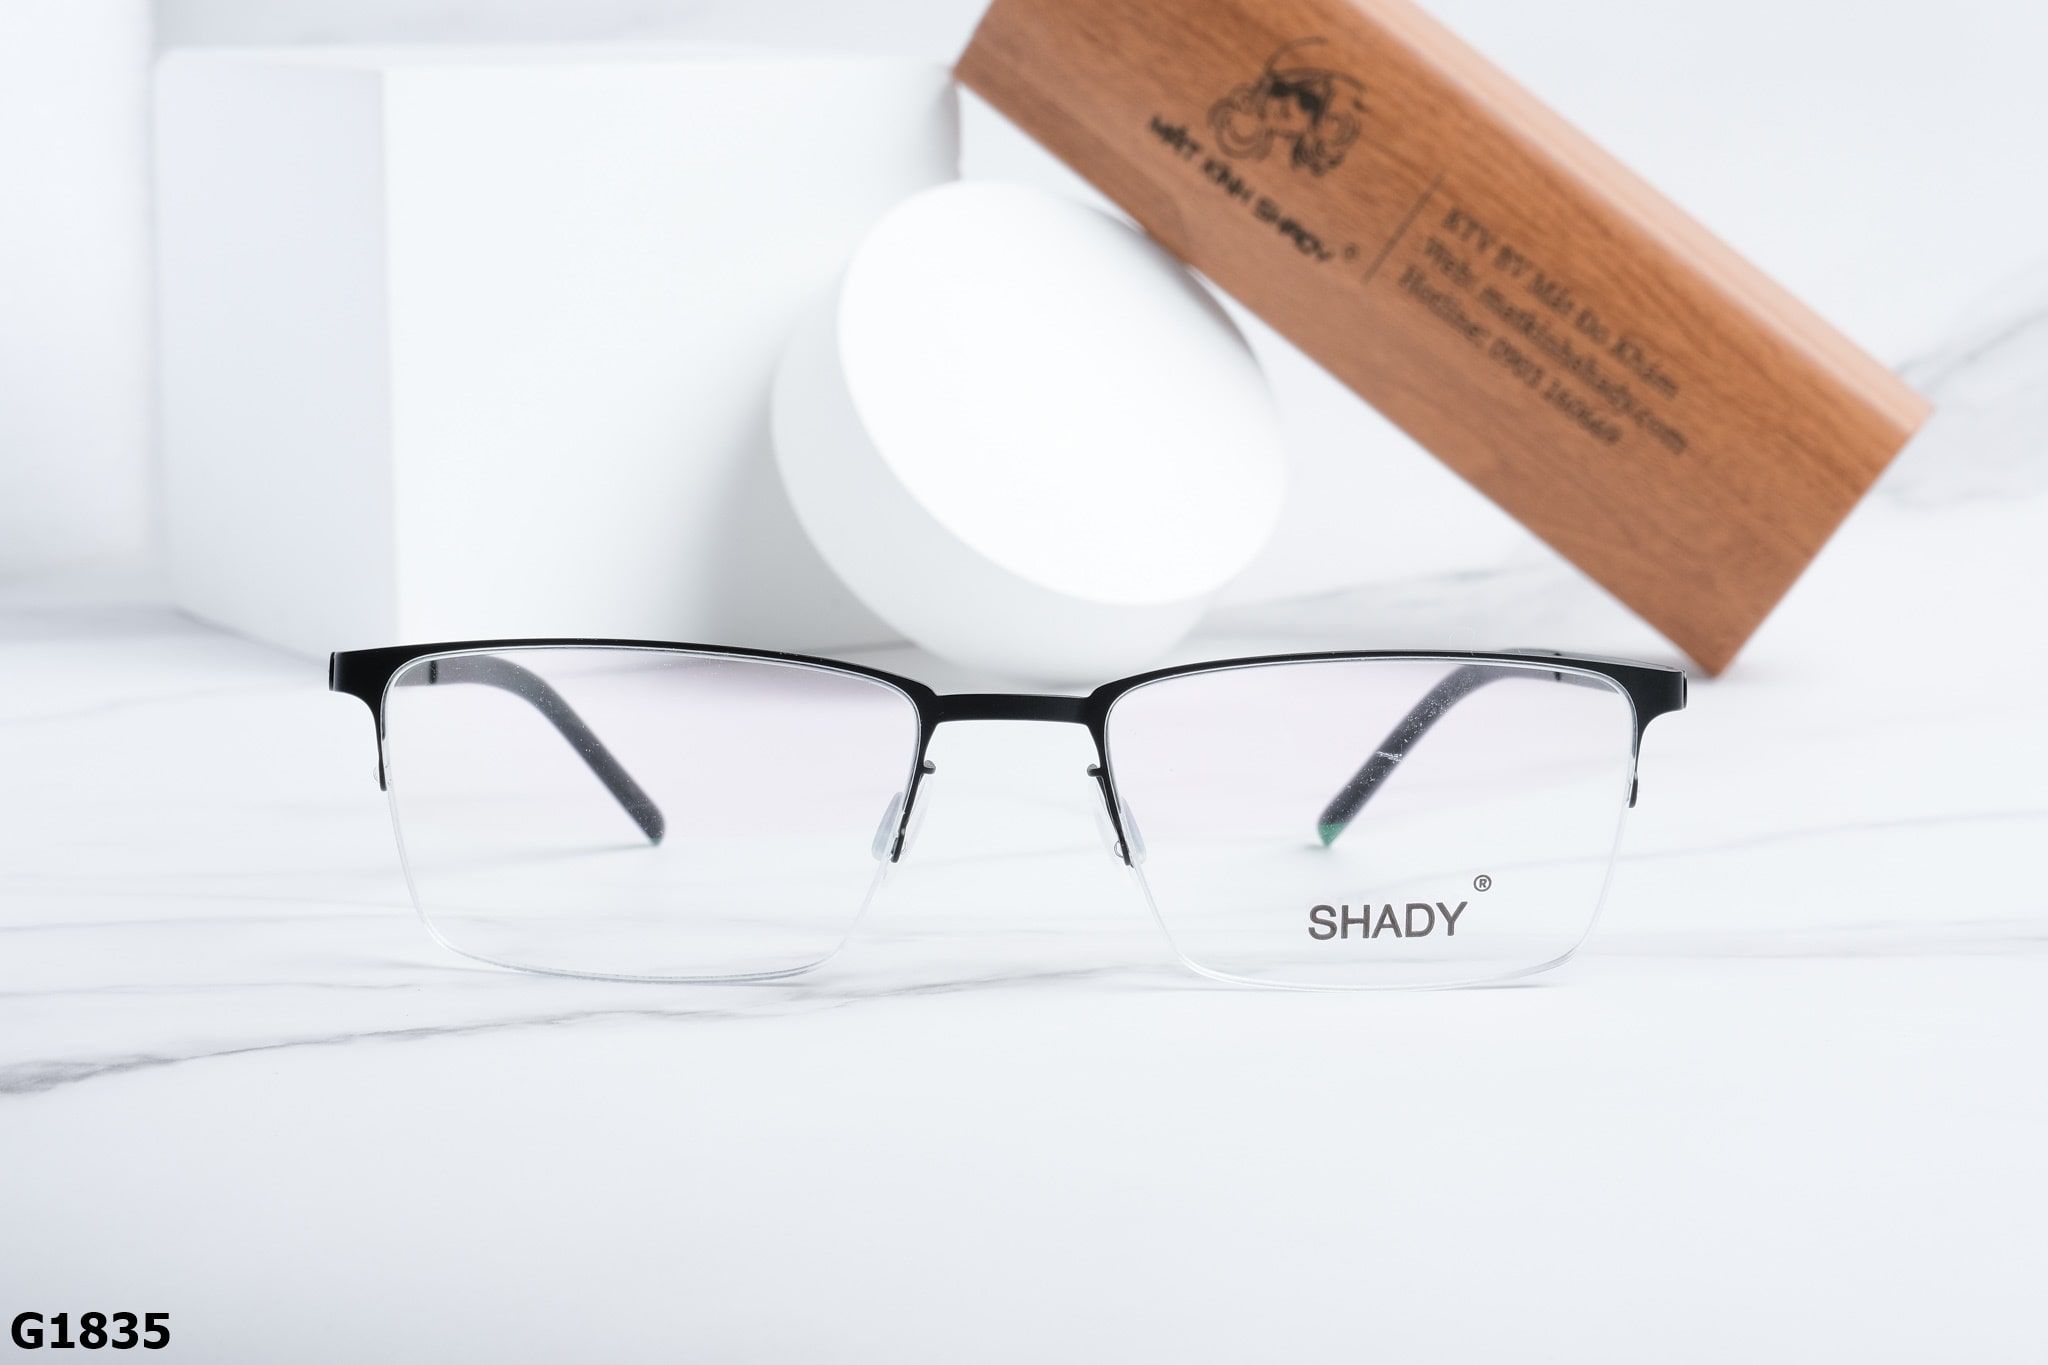  SHADY Eyewear - Glasses - G1835 